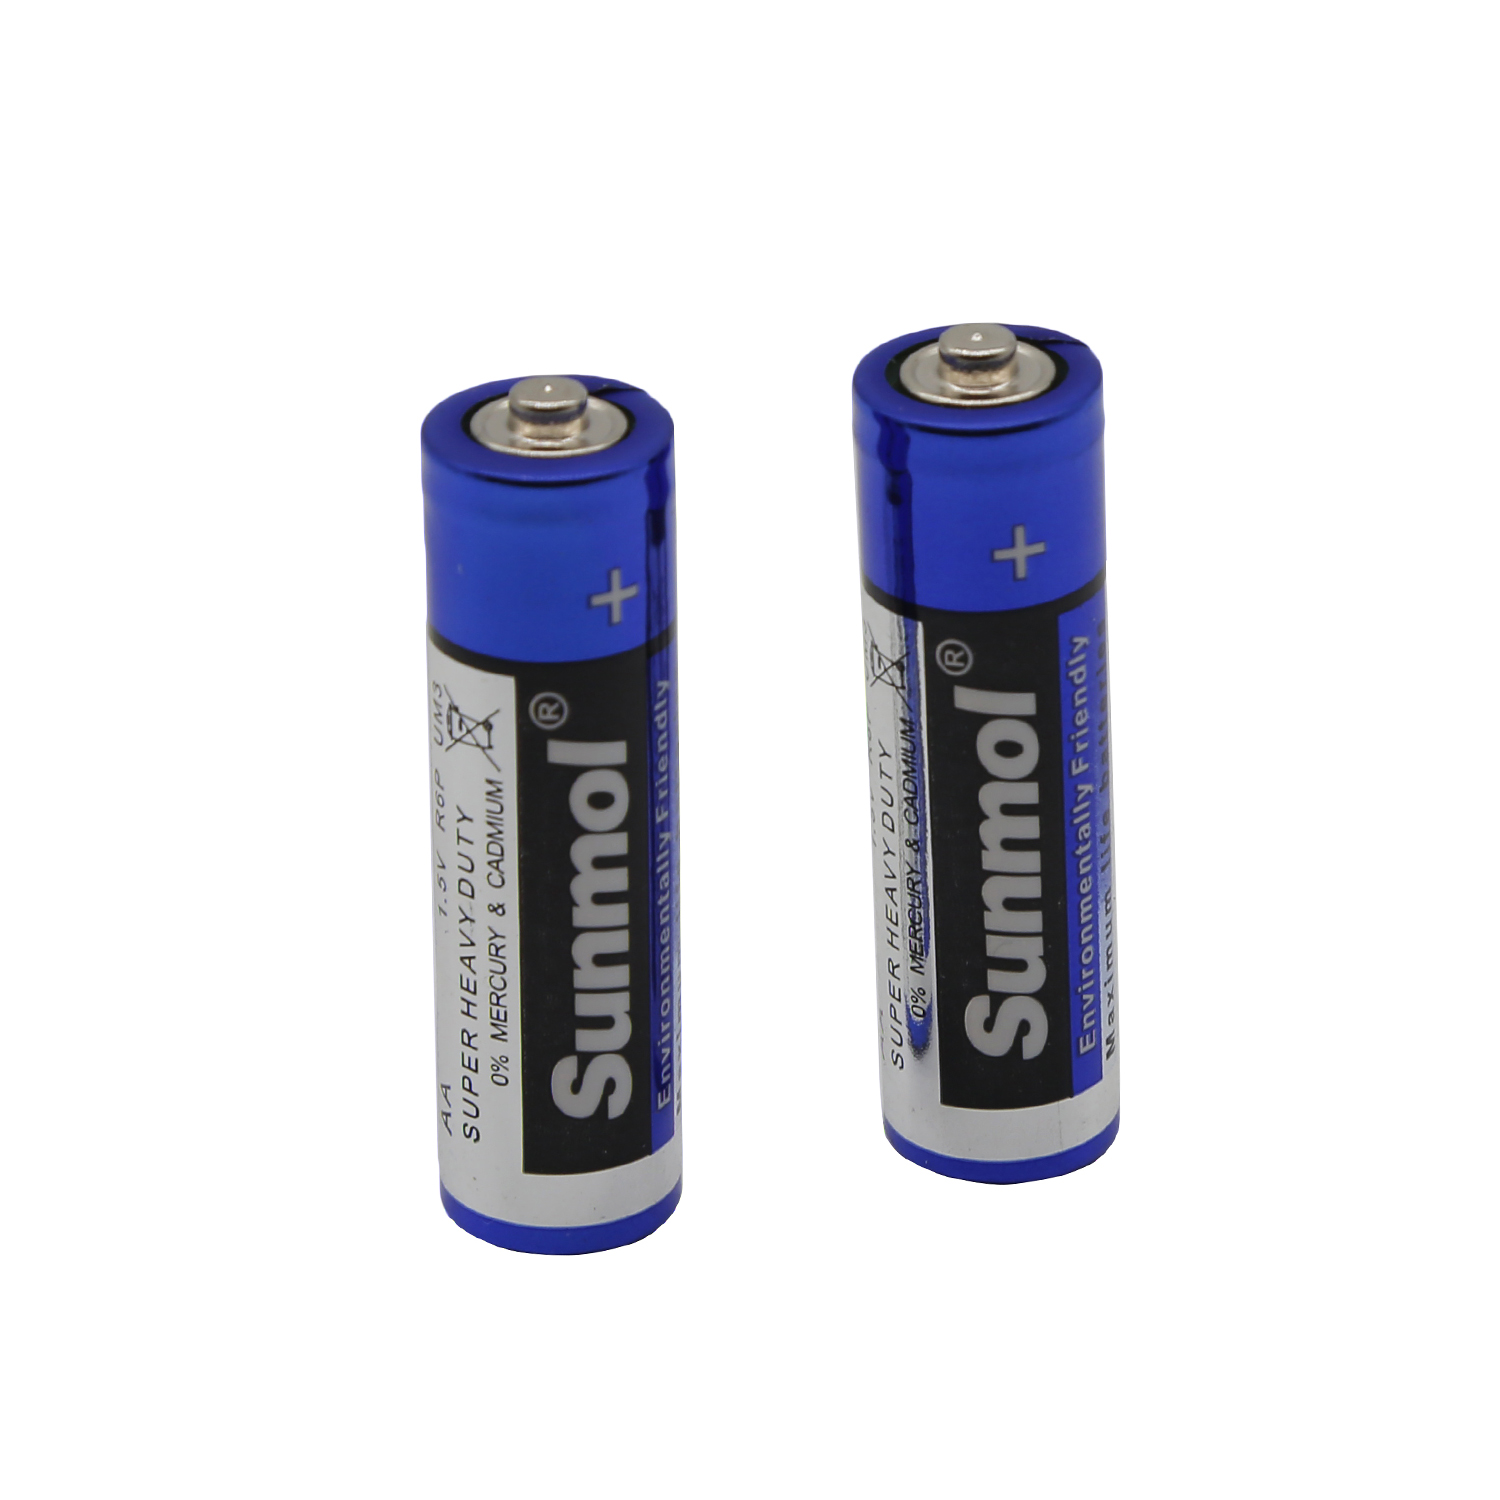 China High Quality Ultra Alkaline Battery - DG Sunmo 1.5V LR14 AM2 Alkaline  C Battery – Sunmol Manufacturer and Supplier